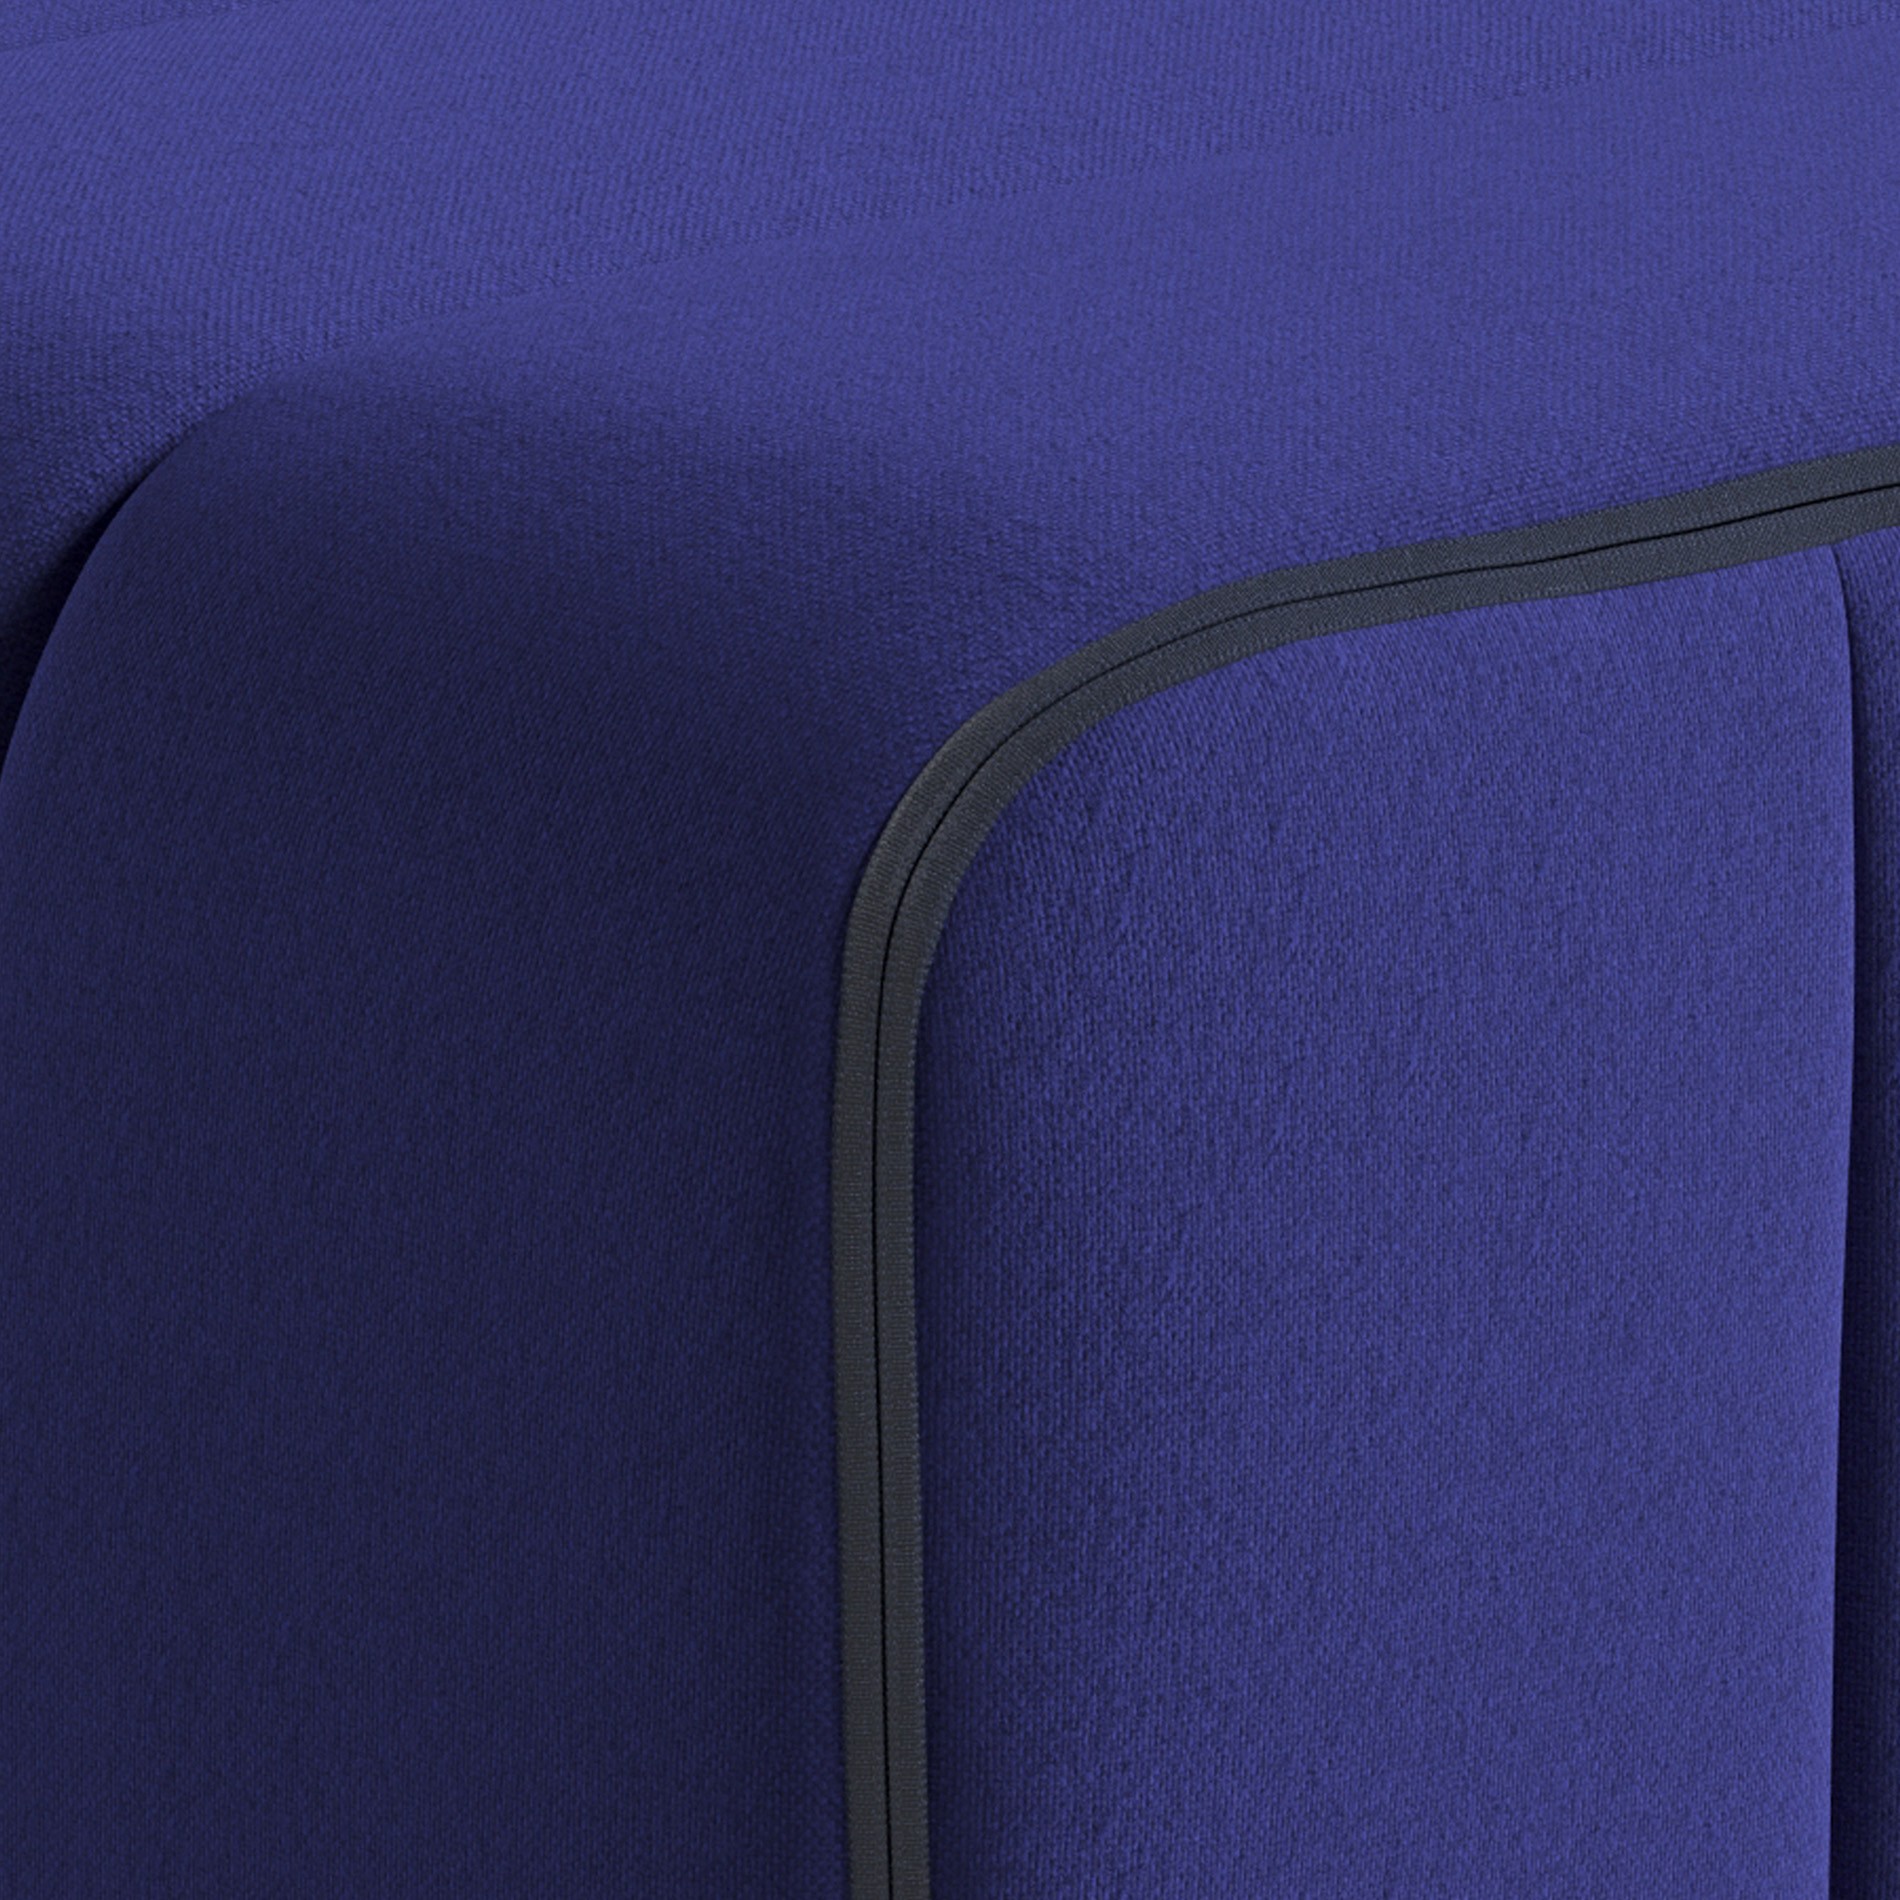 Tessuto Jet - Trevira CS Blue viollet